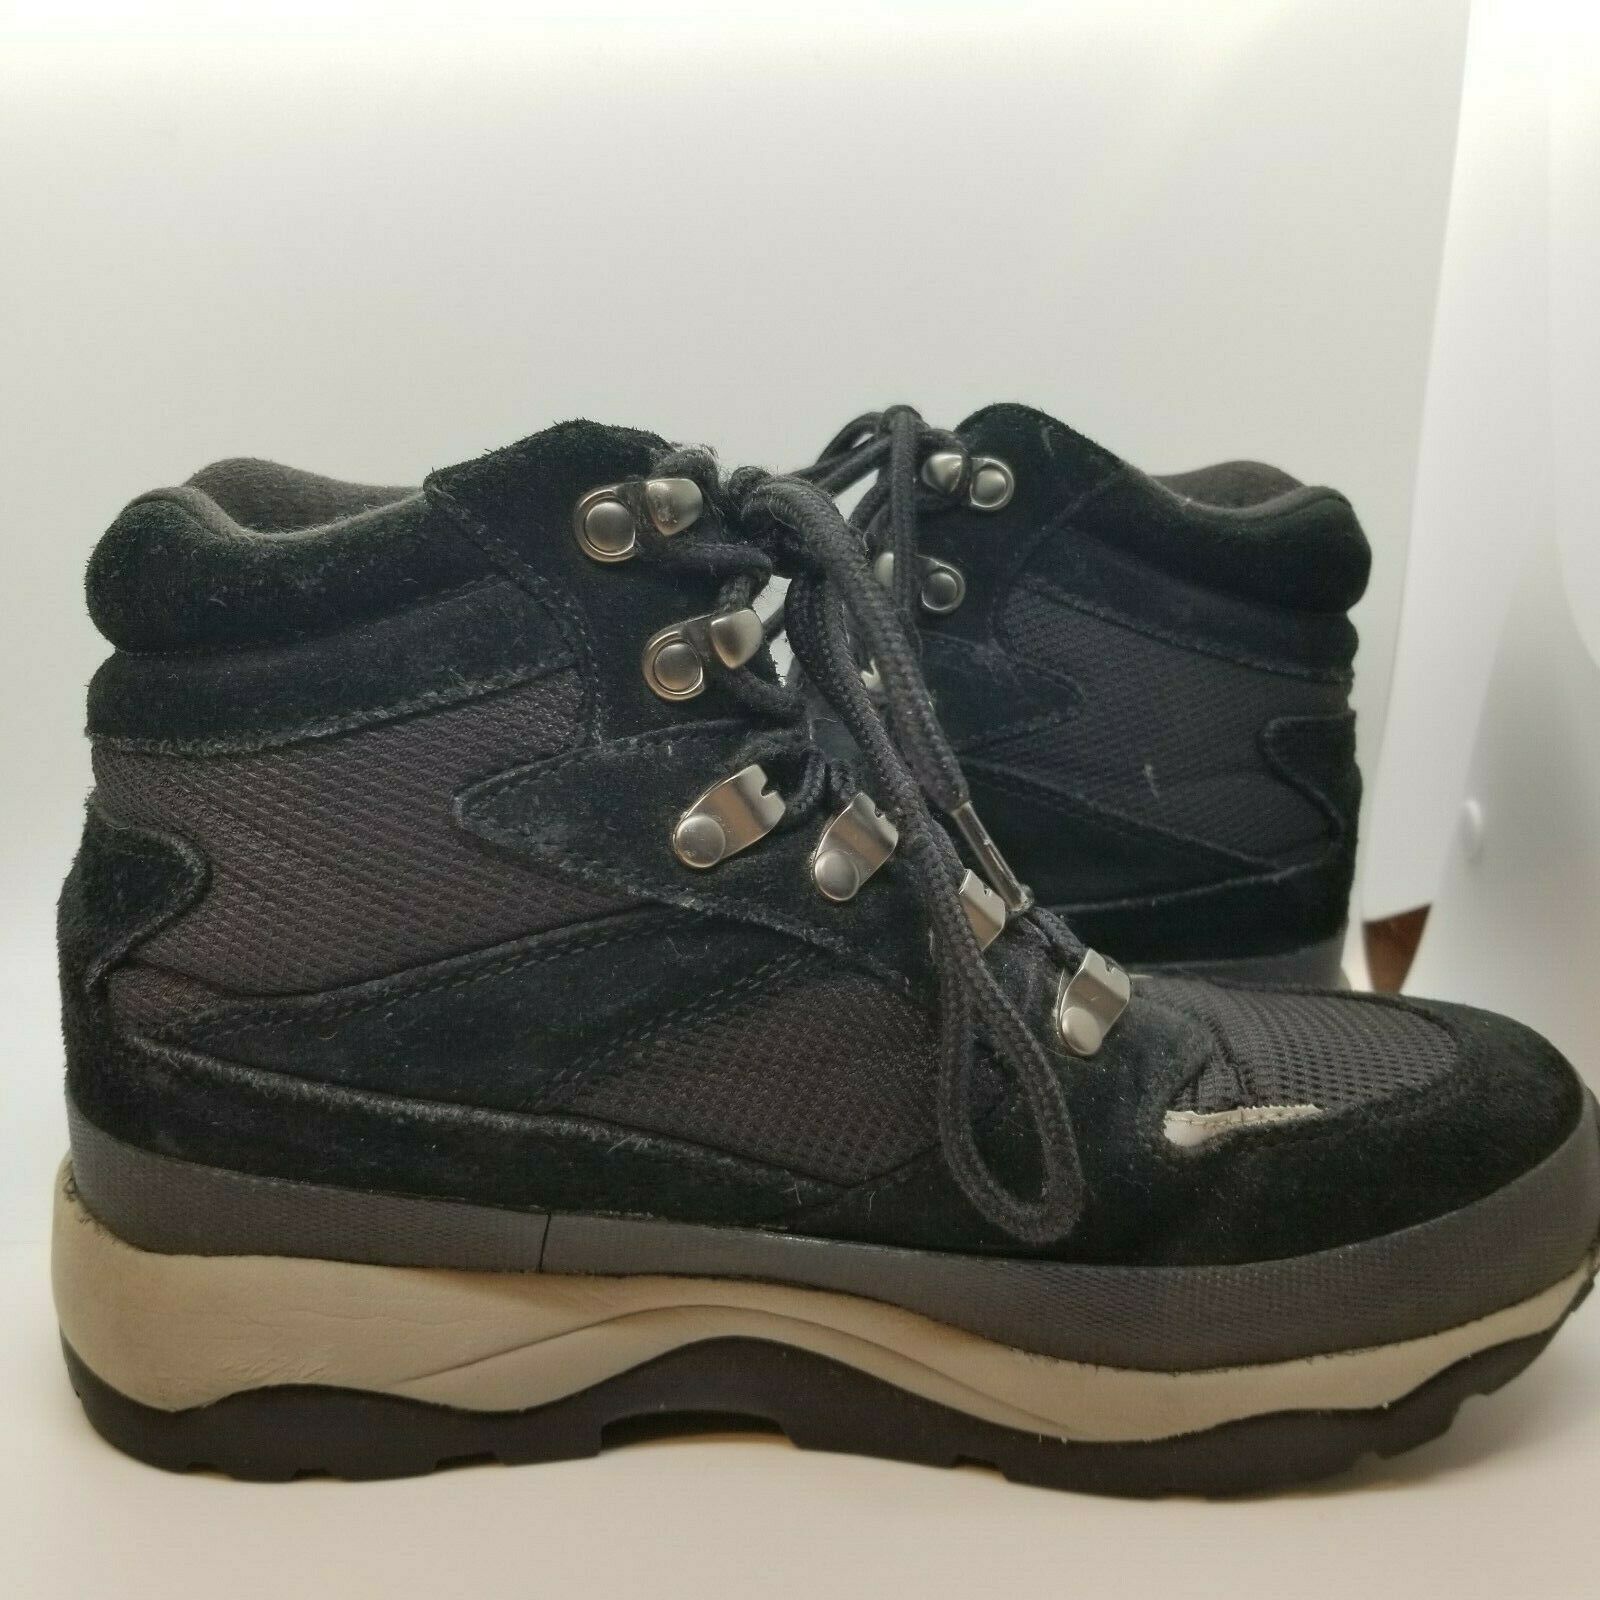 L.L. Bean Women's Hiking Boots Prima Loft Black and Grey Size 9 Medium ...